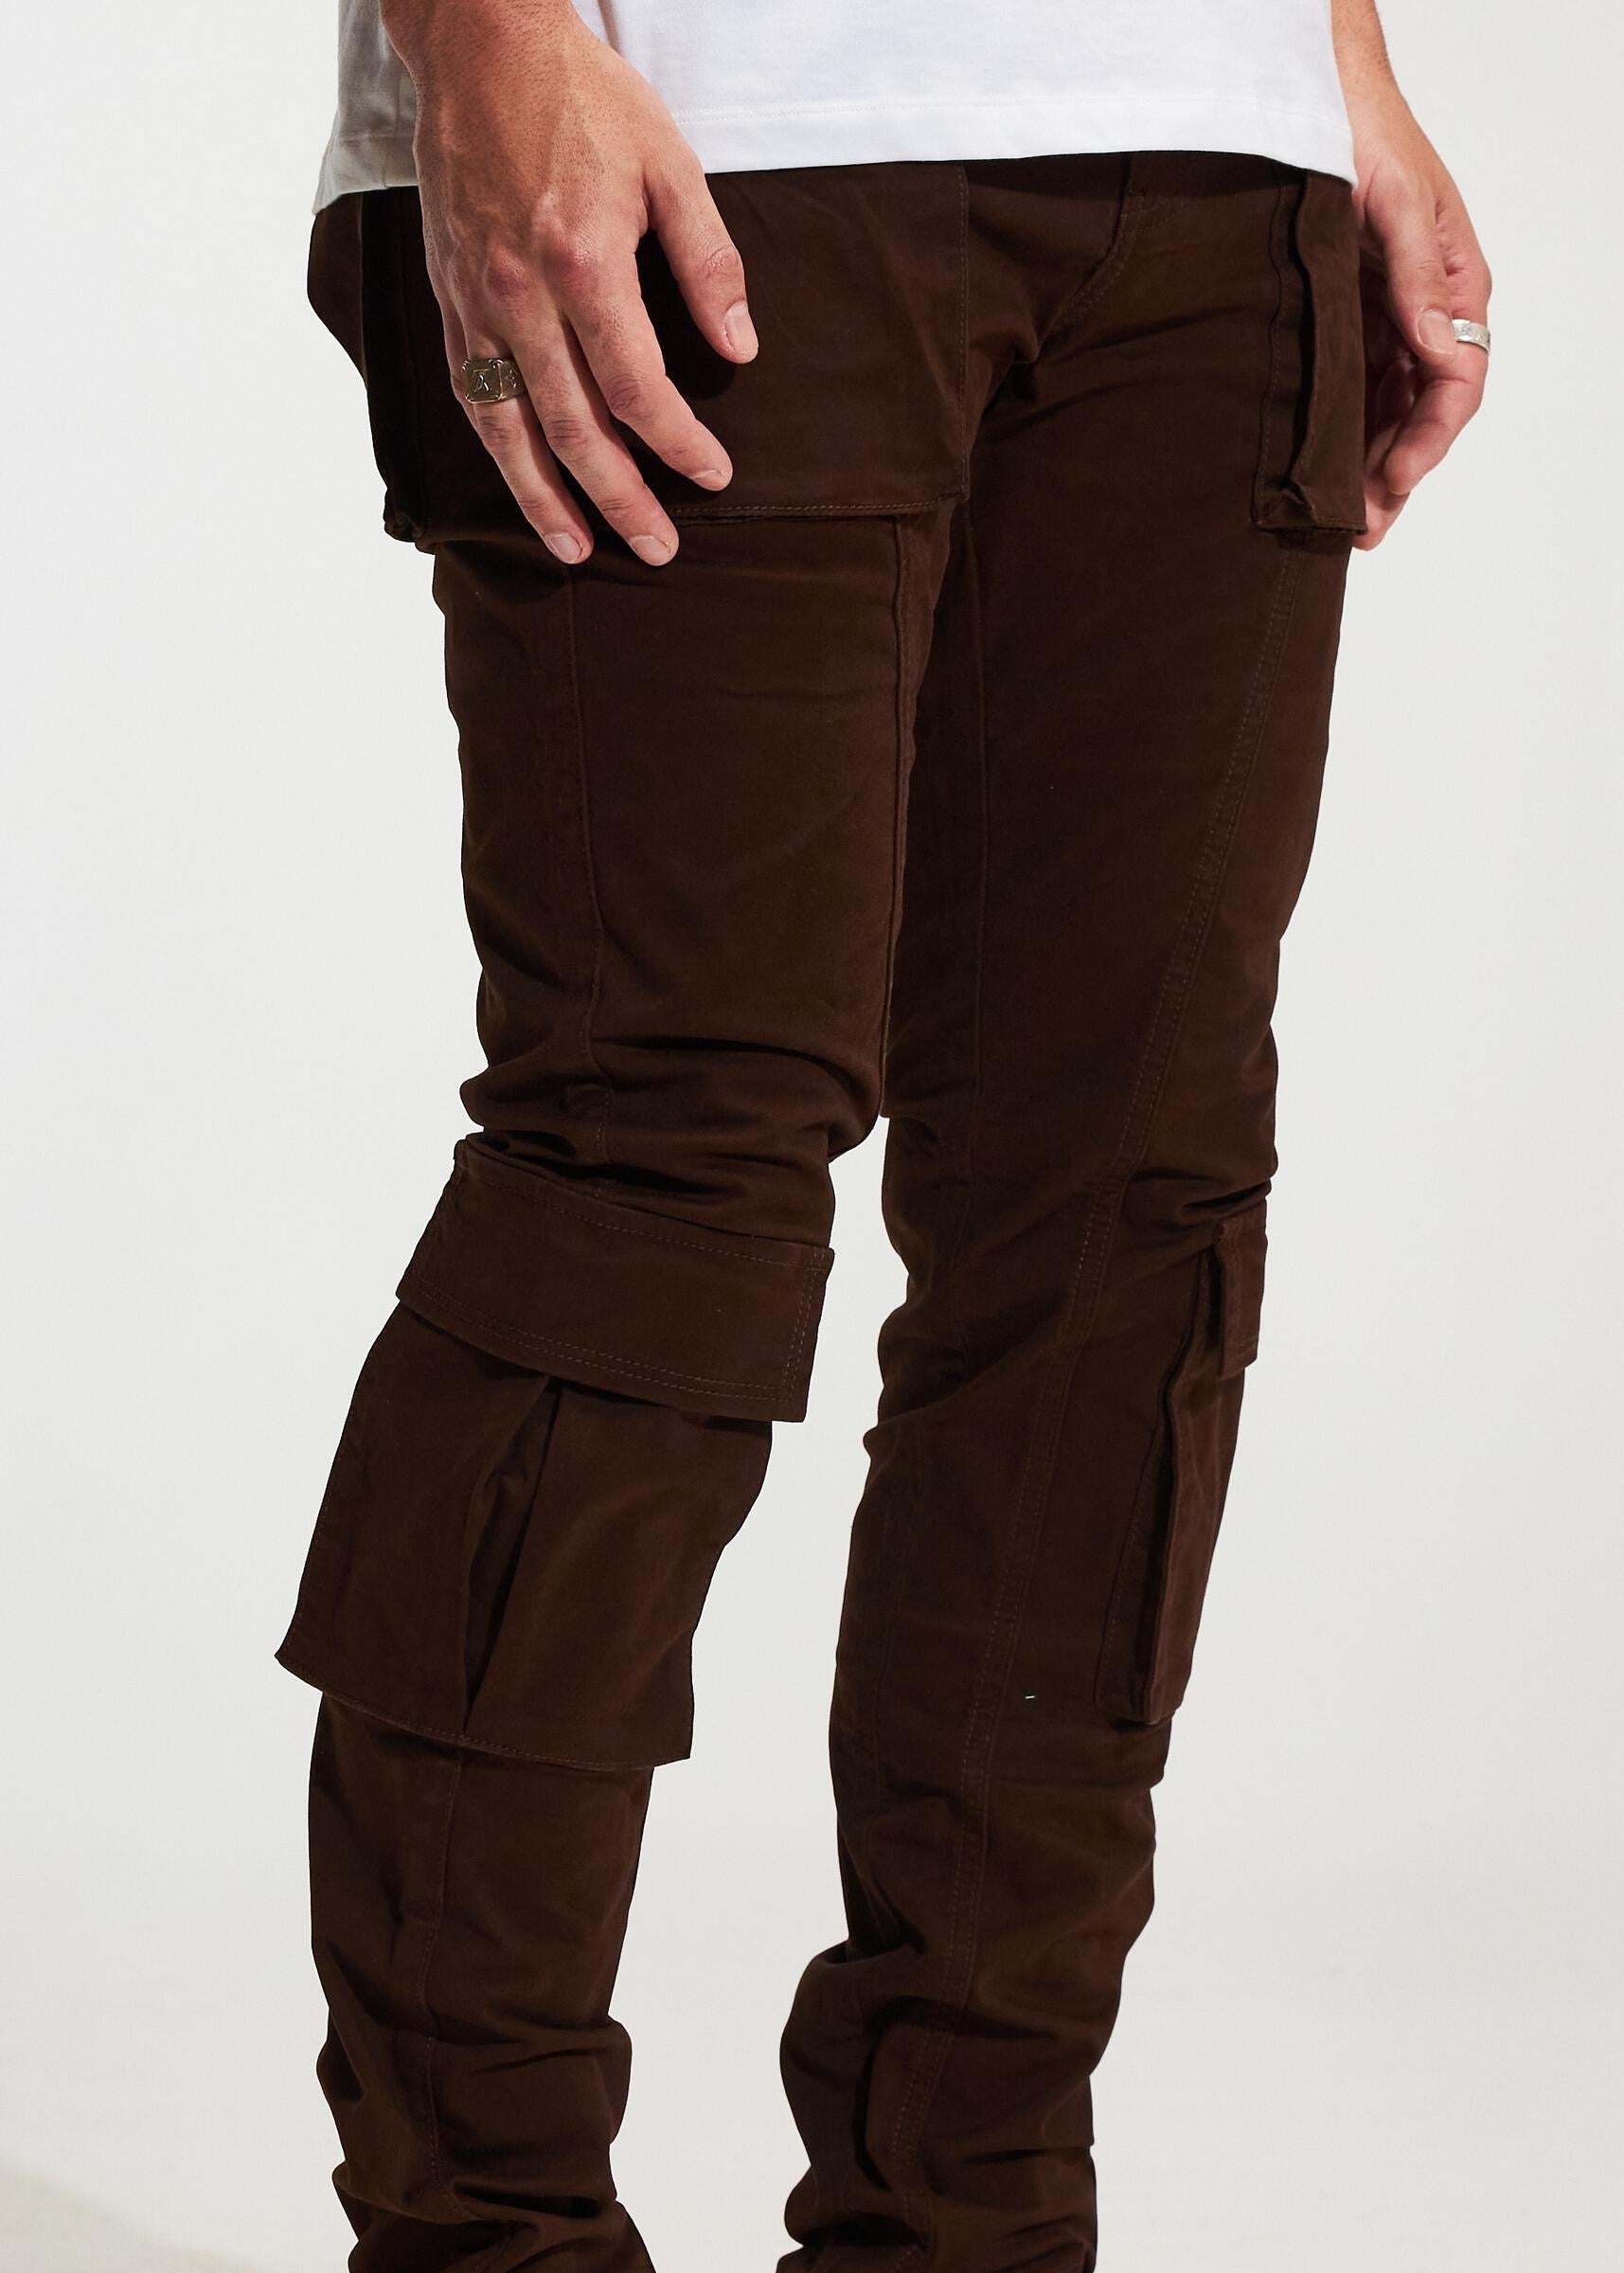 Update more than 189 dark brown denim jeans latest